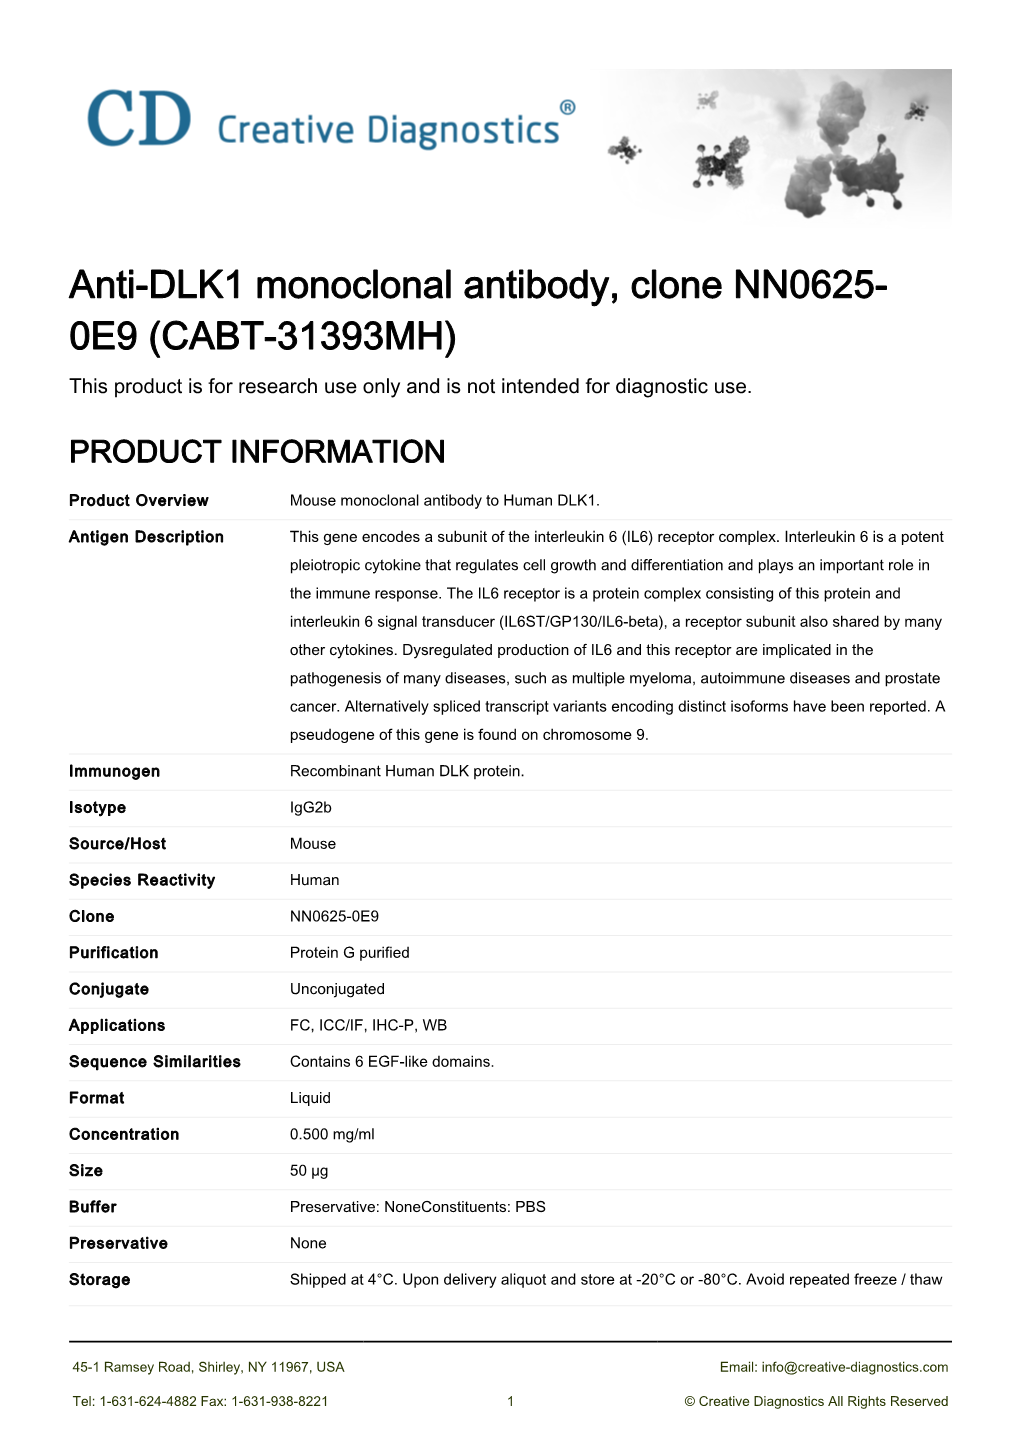 Anti-DLK1 Monoclonal Antibody, Clone NN0625-0E9